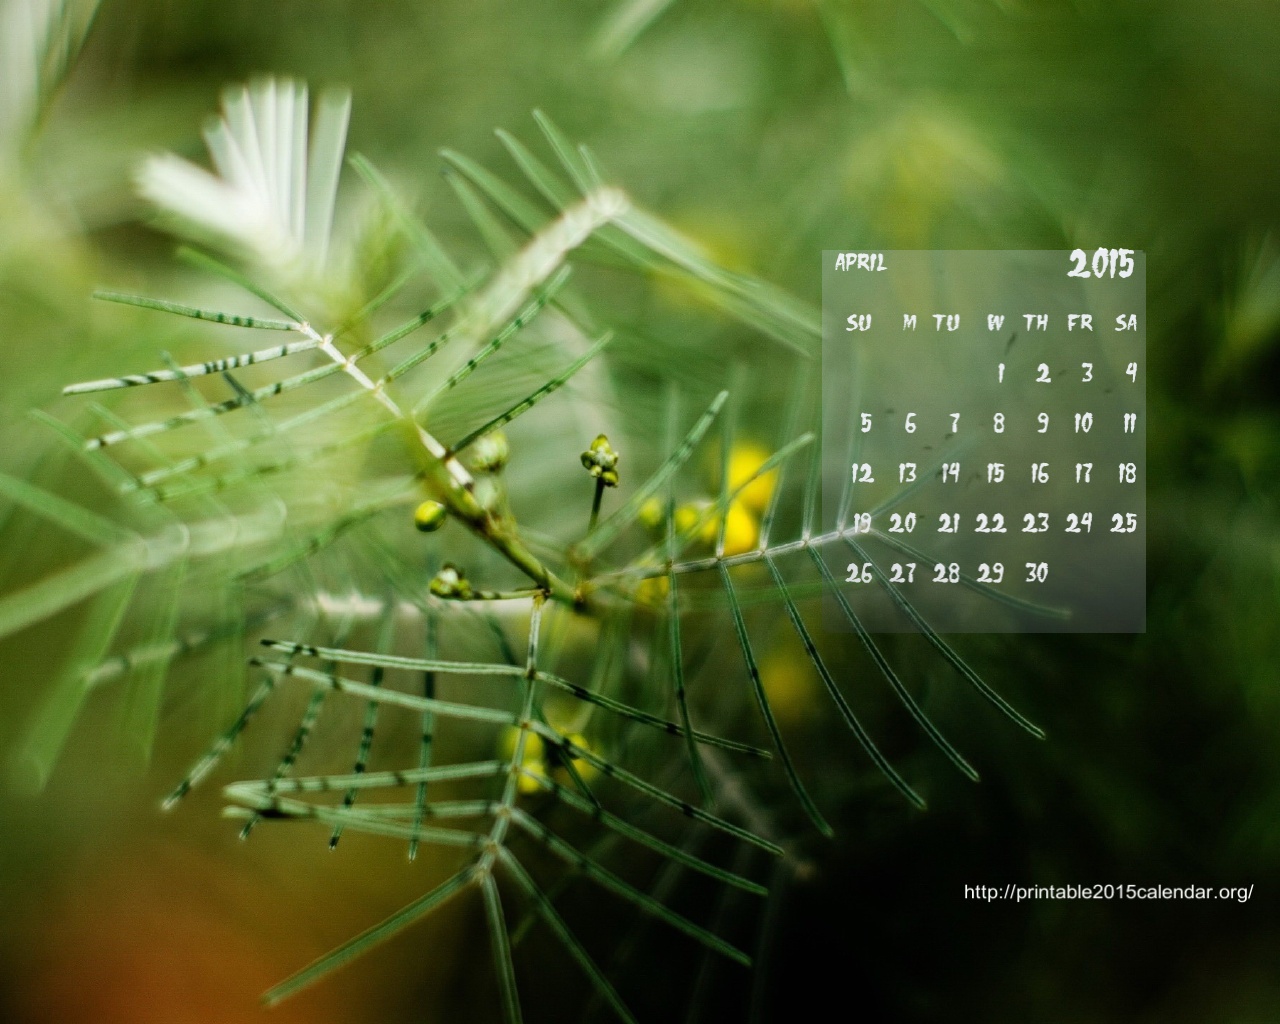 2015 Calendar Background Images Calendar Template 2016